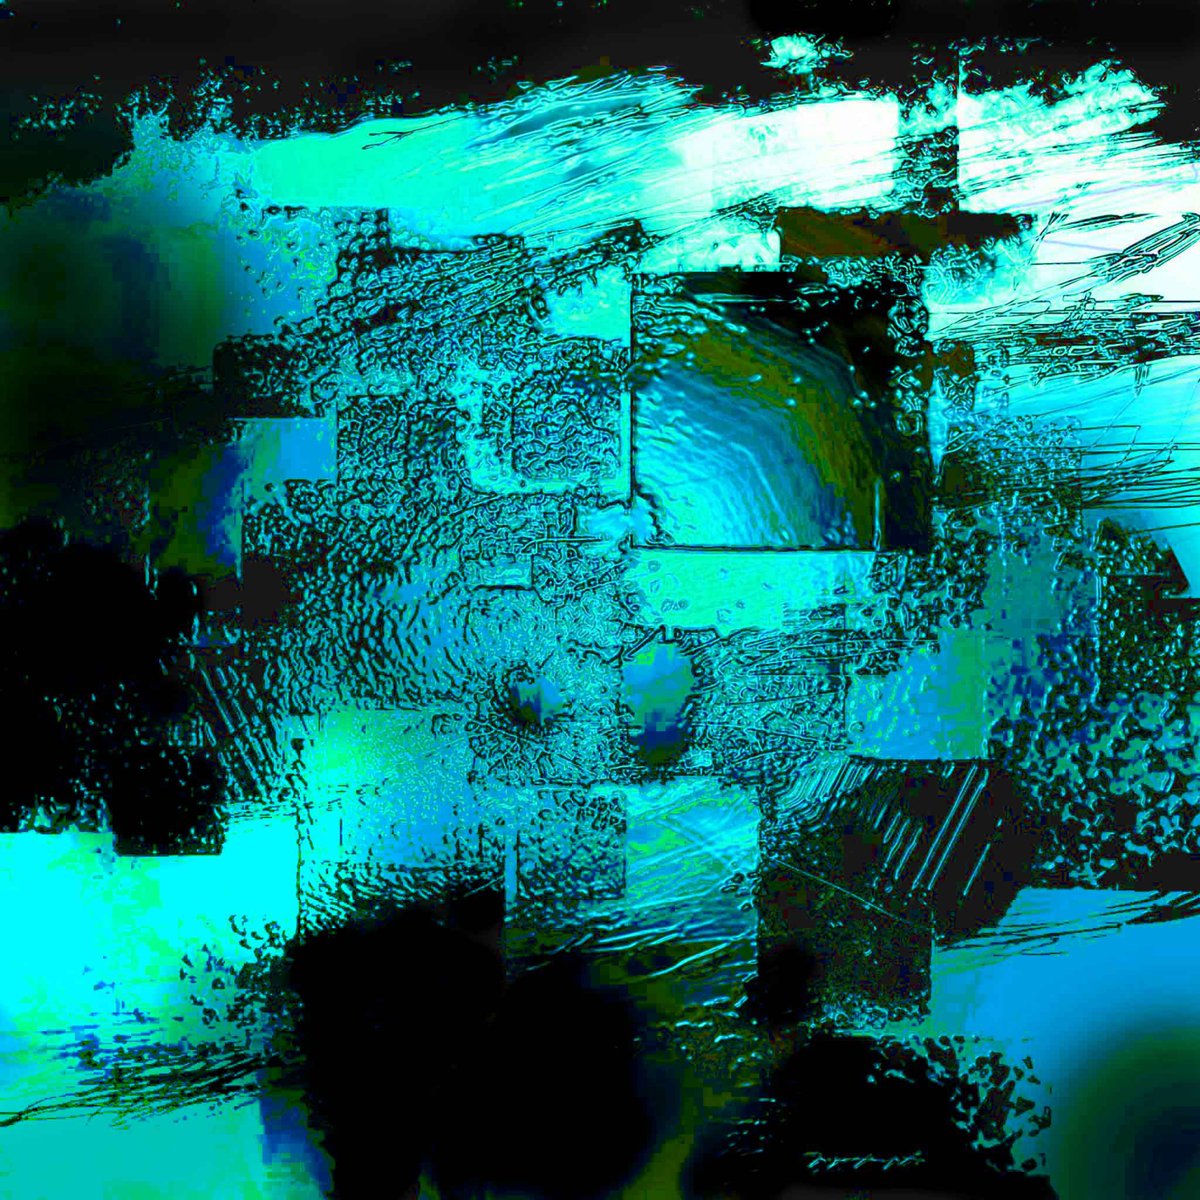 Floating / 01 ; - Cool Mint Blue Water - 
- 透明色の青 - 
Taizo Hayashi ; Japan  

#art #arte #abstractart #abstractpainting 
#digitalart 
#抽象画　
#デジタルアート 　＃デジタル絵展示場　　　
＃絵描きさんと繋がりたい　
＃アート好きな人と繋がりたい　
＃絵画　＃デジタル絵画